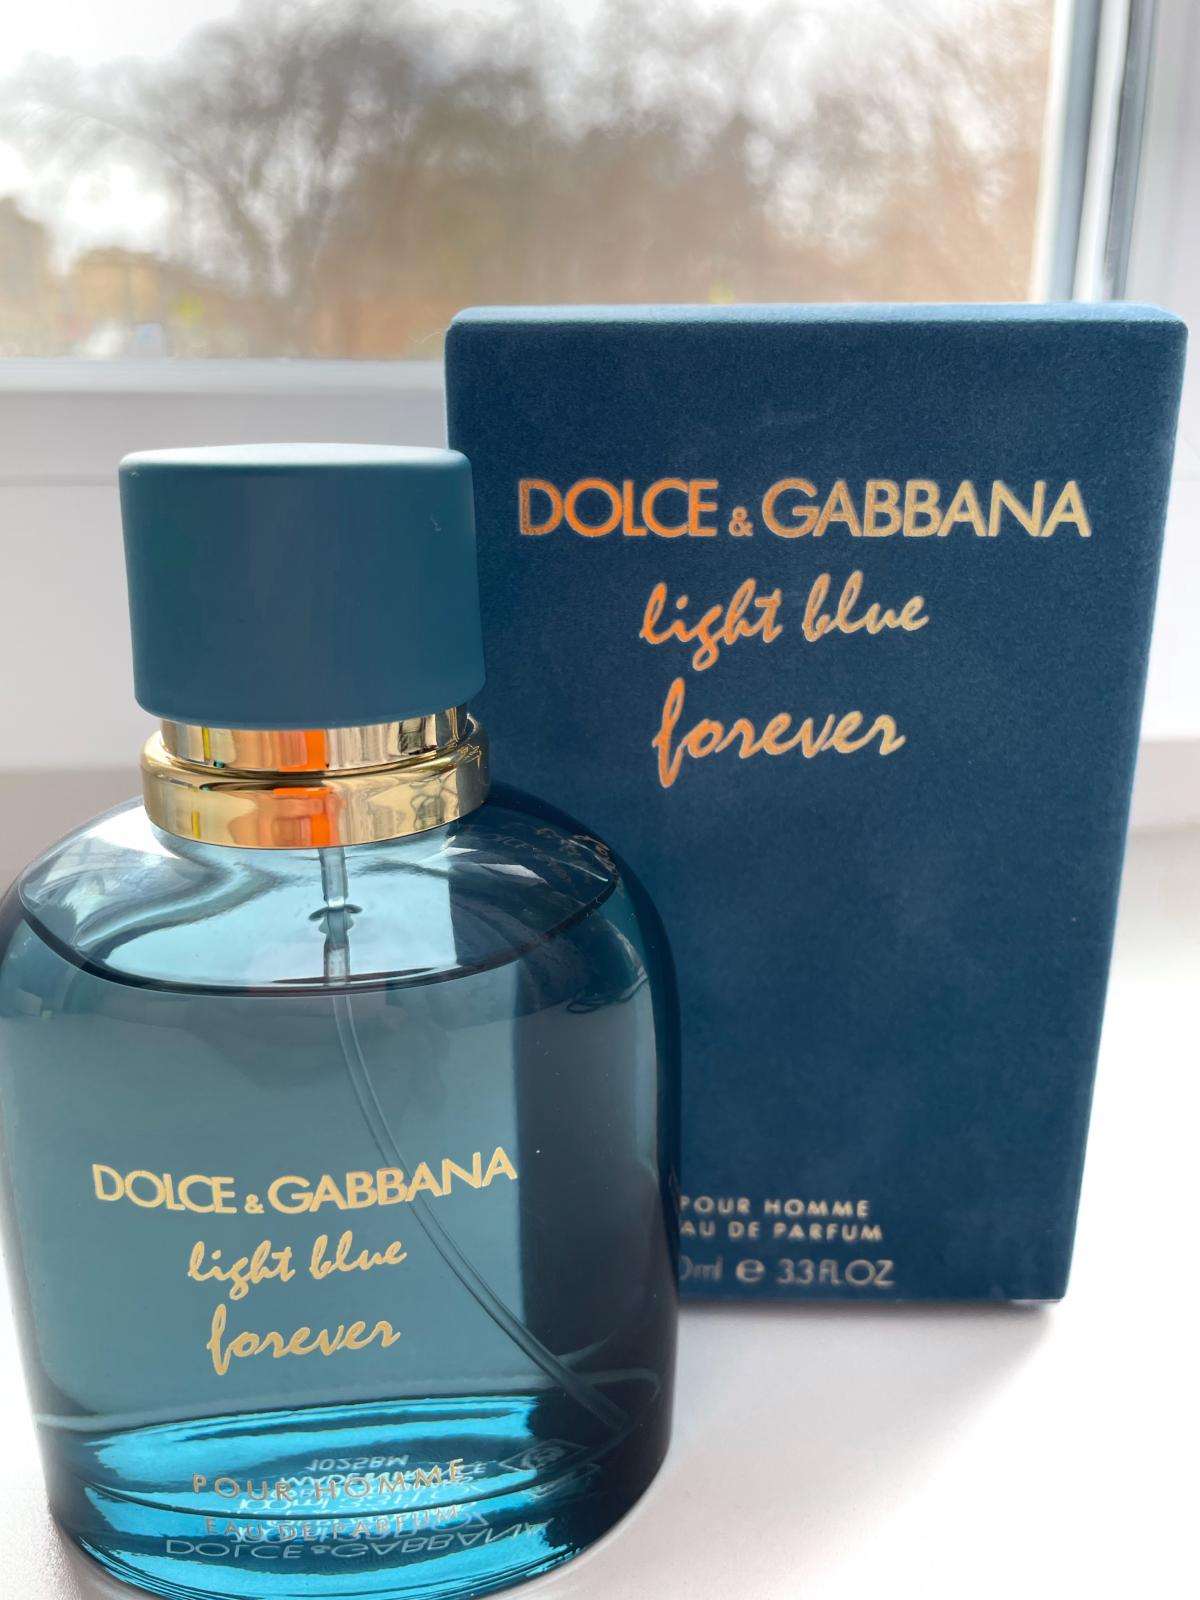 Dolce gabbana light blue forever pour. Dolce Gabbana Light Blue Forever pour homme. Dolce & Gabbana Light Blue Forever pour homme EDP, 100 ml. Лайт Блю Форевер Дольче Габбана 100 мл. Дольче Габбана Лайт Блю Форевер.